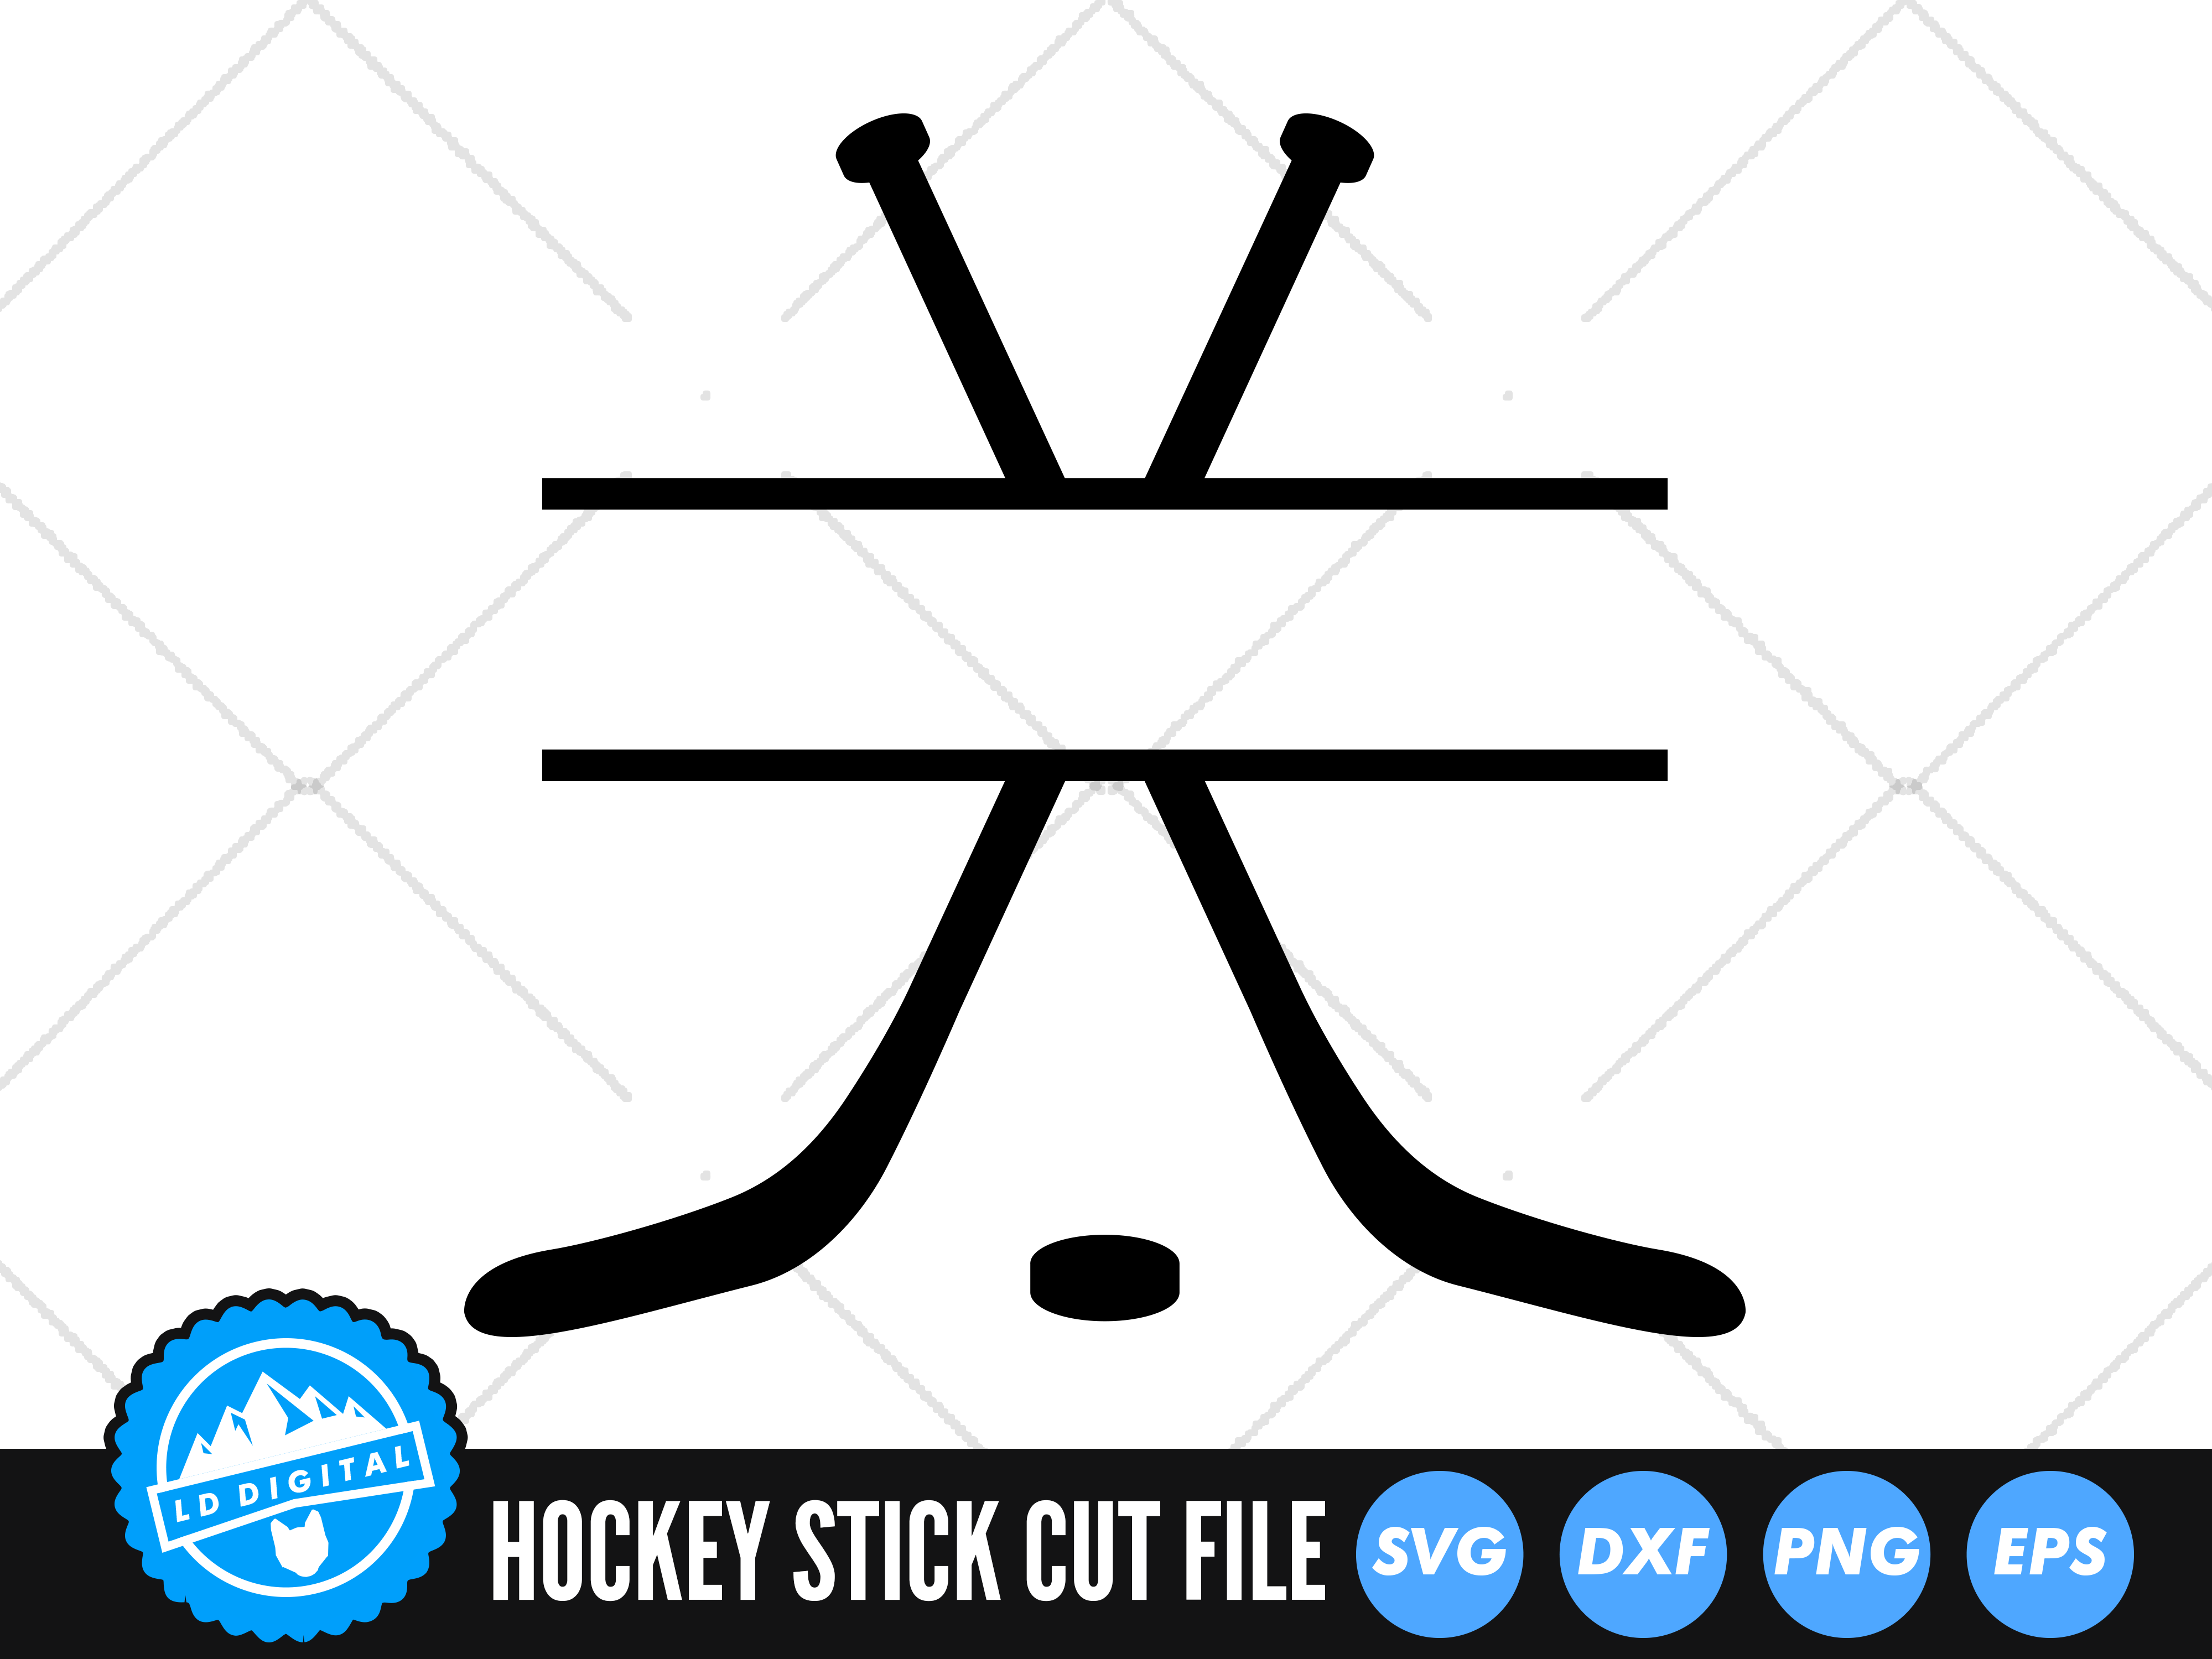 crossed ice hockey sticks clipart